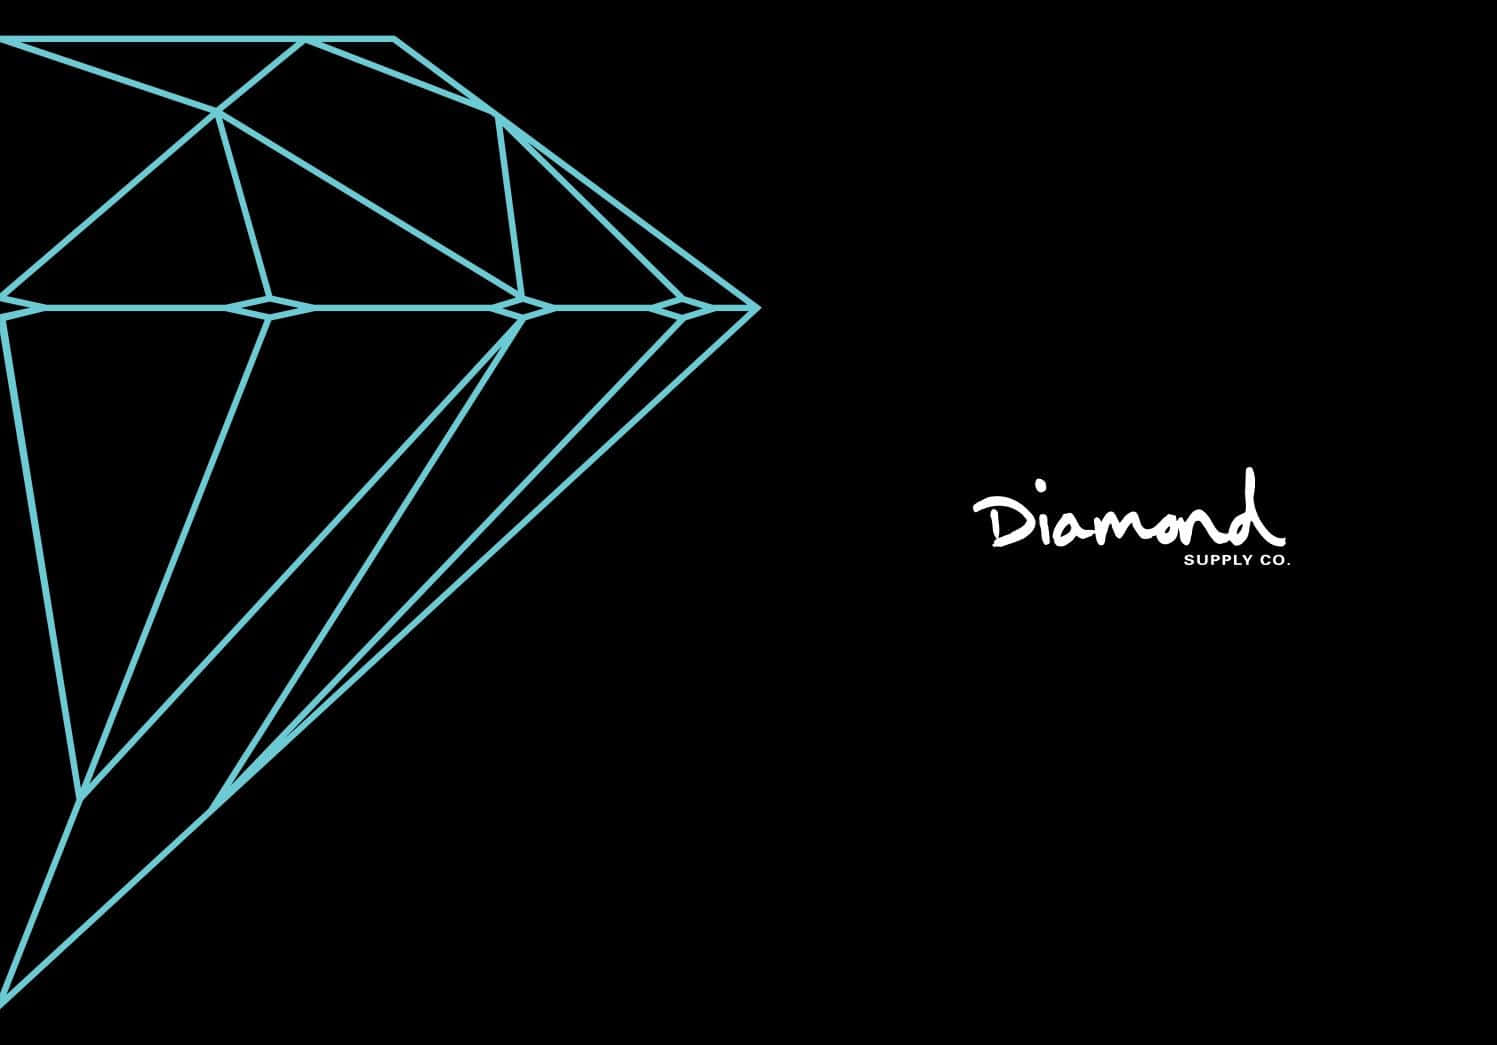 Diamond Supply Co Logo 1497 X 1045 Wallpaper